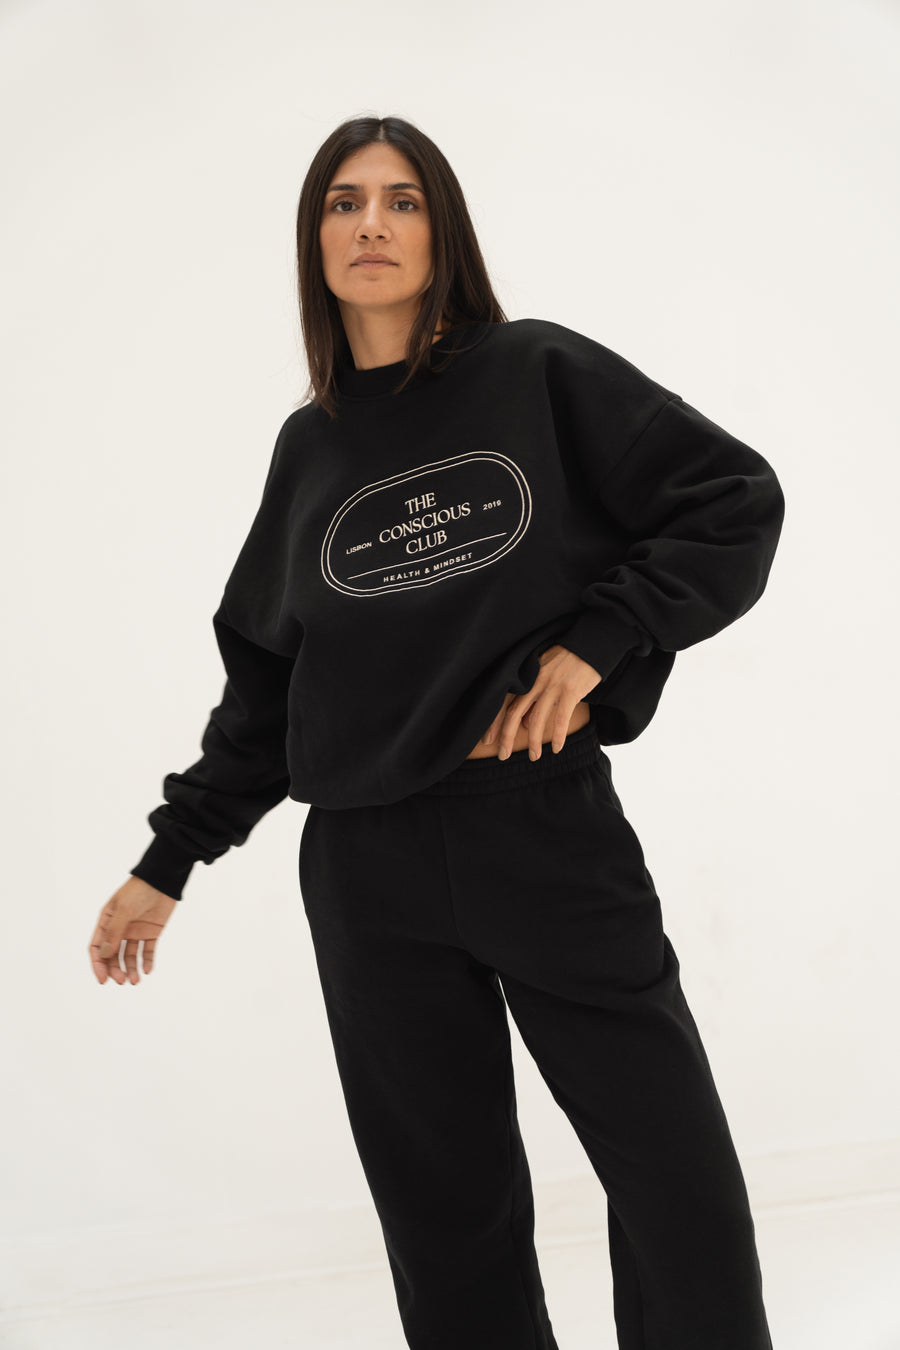 organic cotton sweater in black